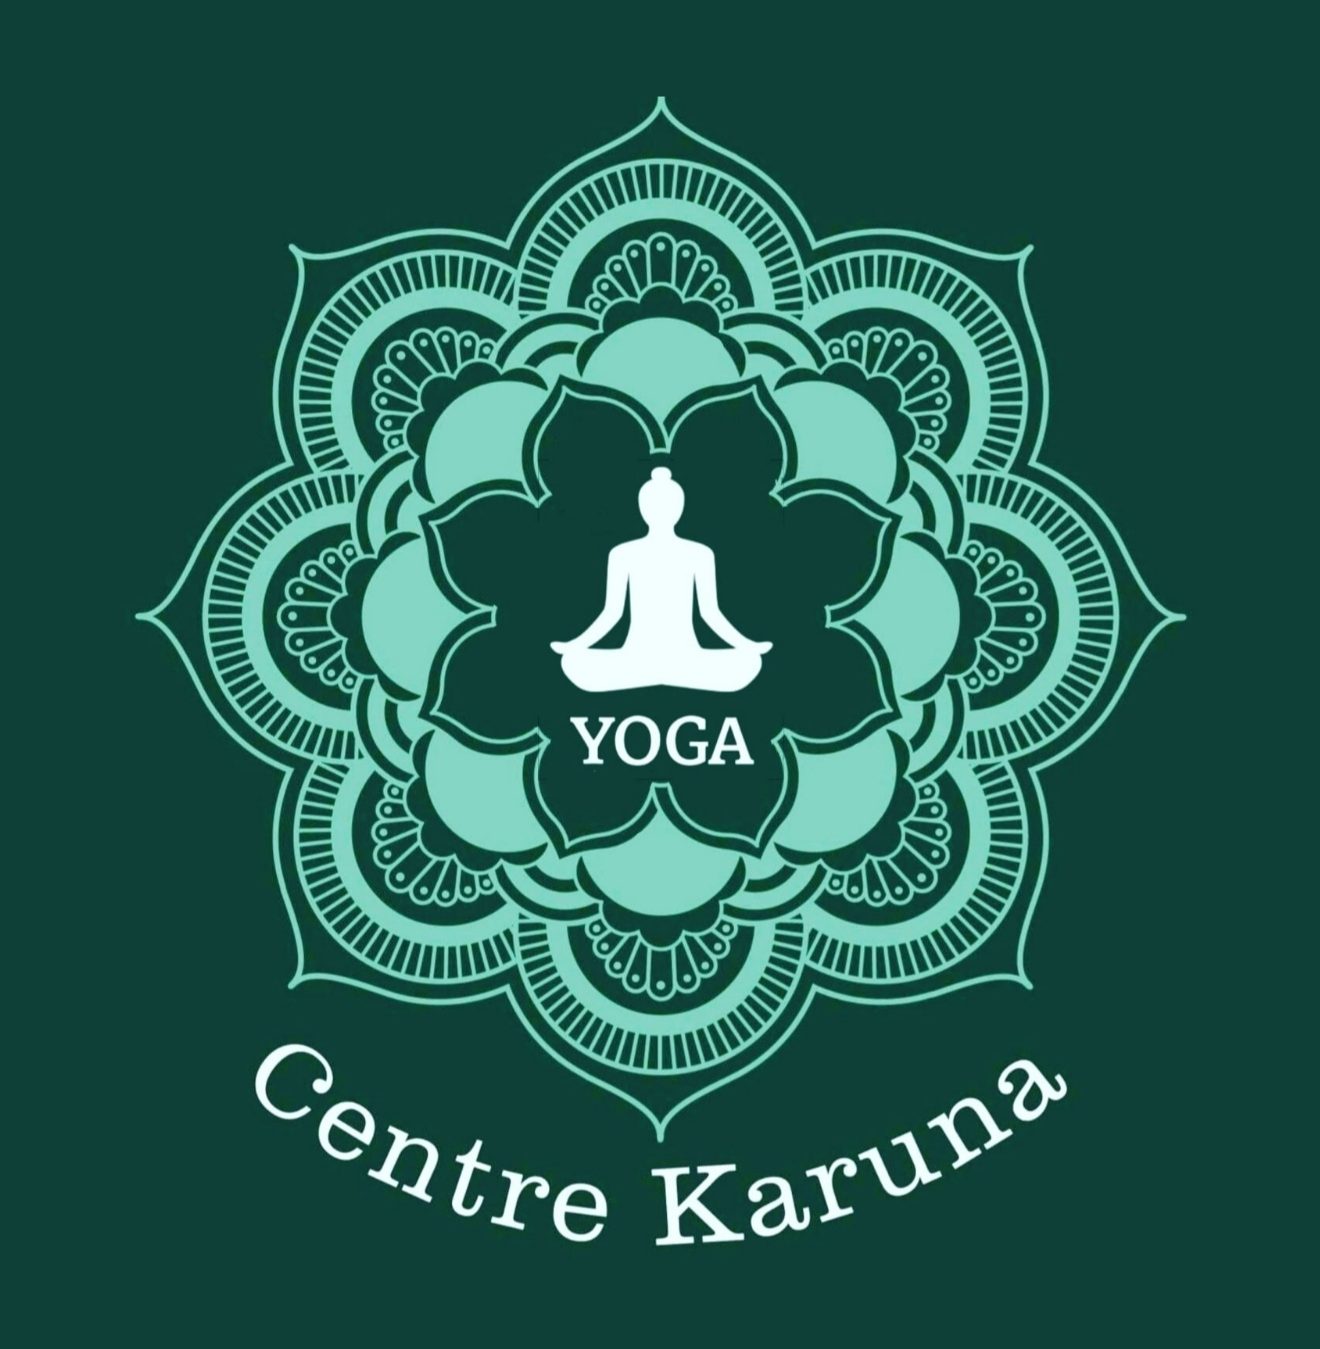 Centre Karuna